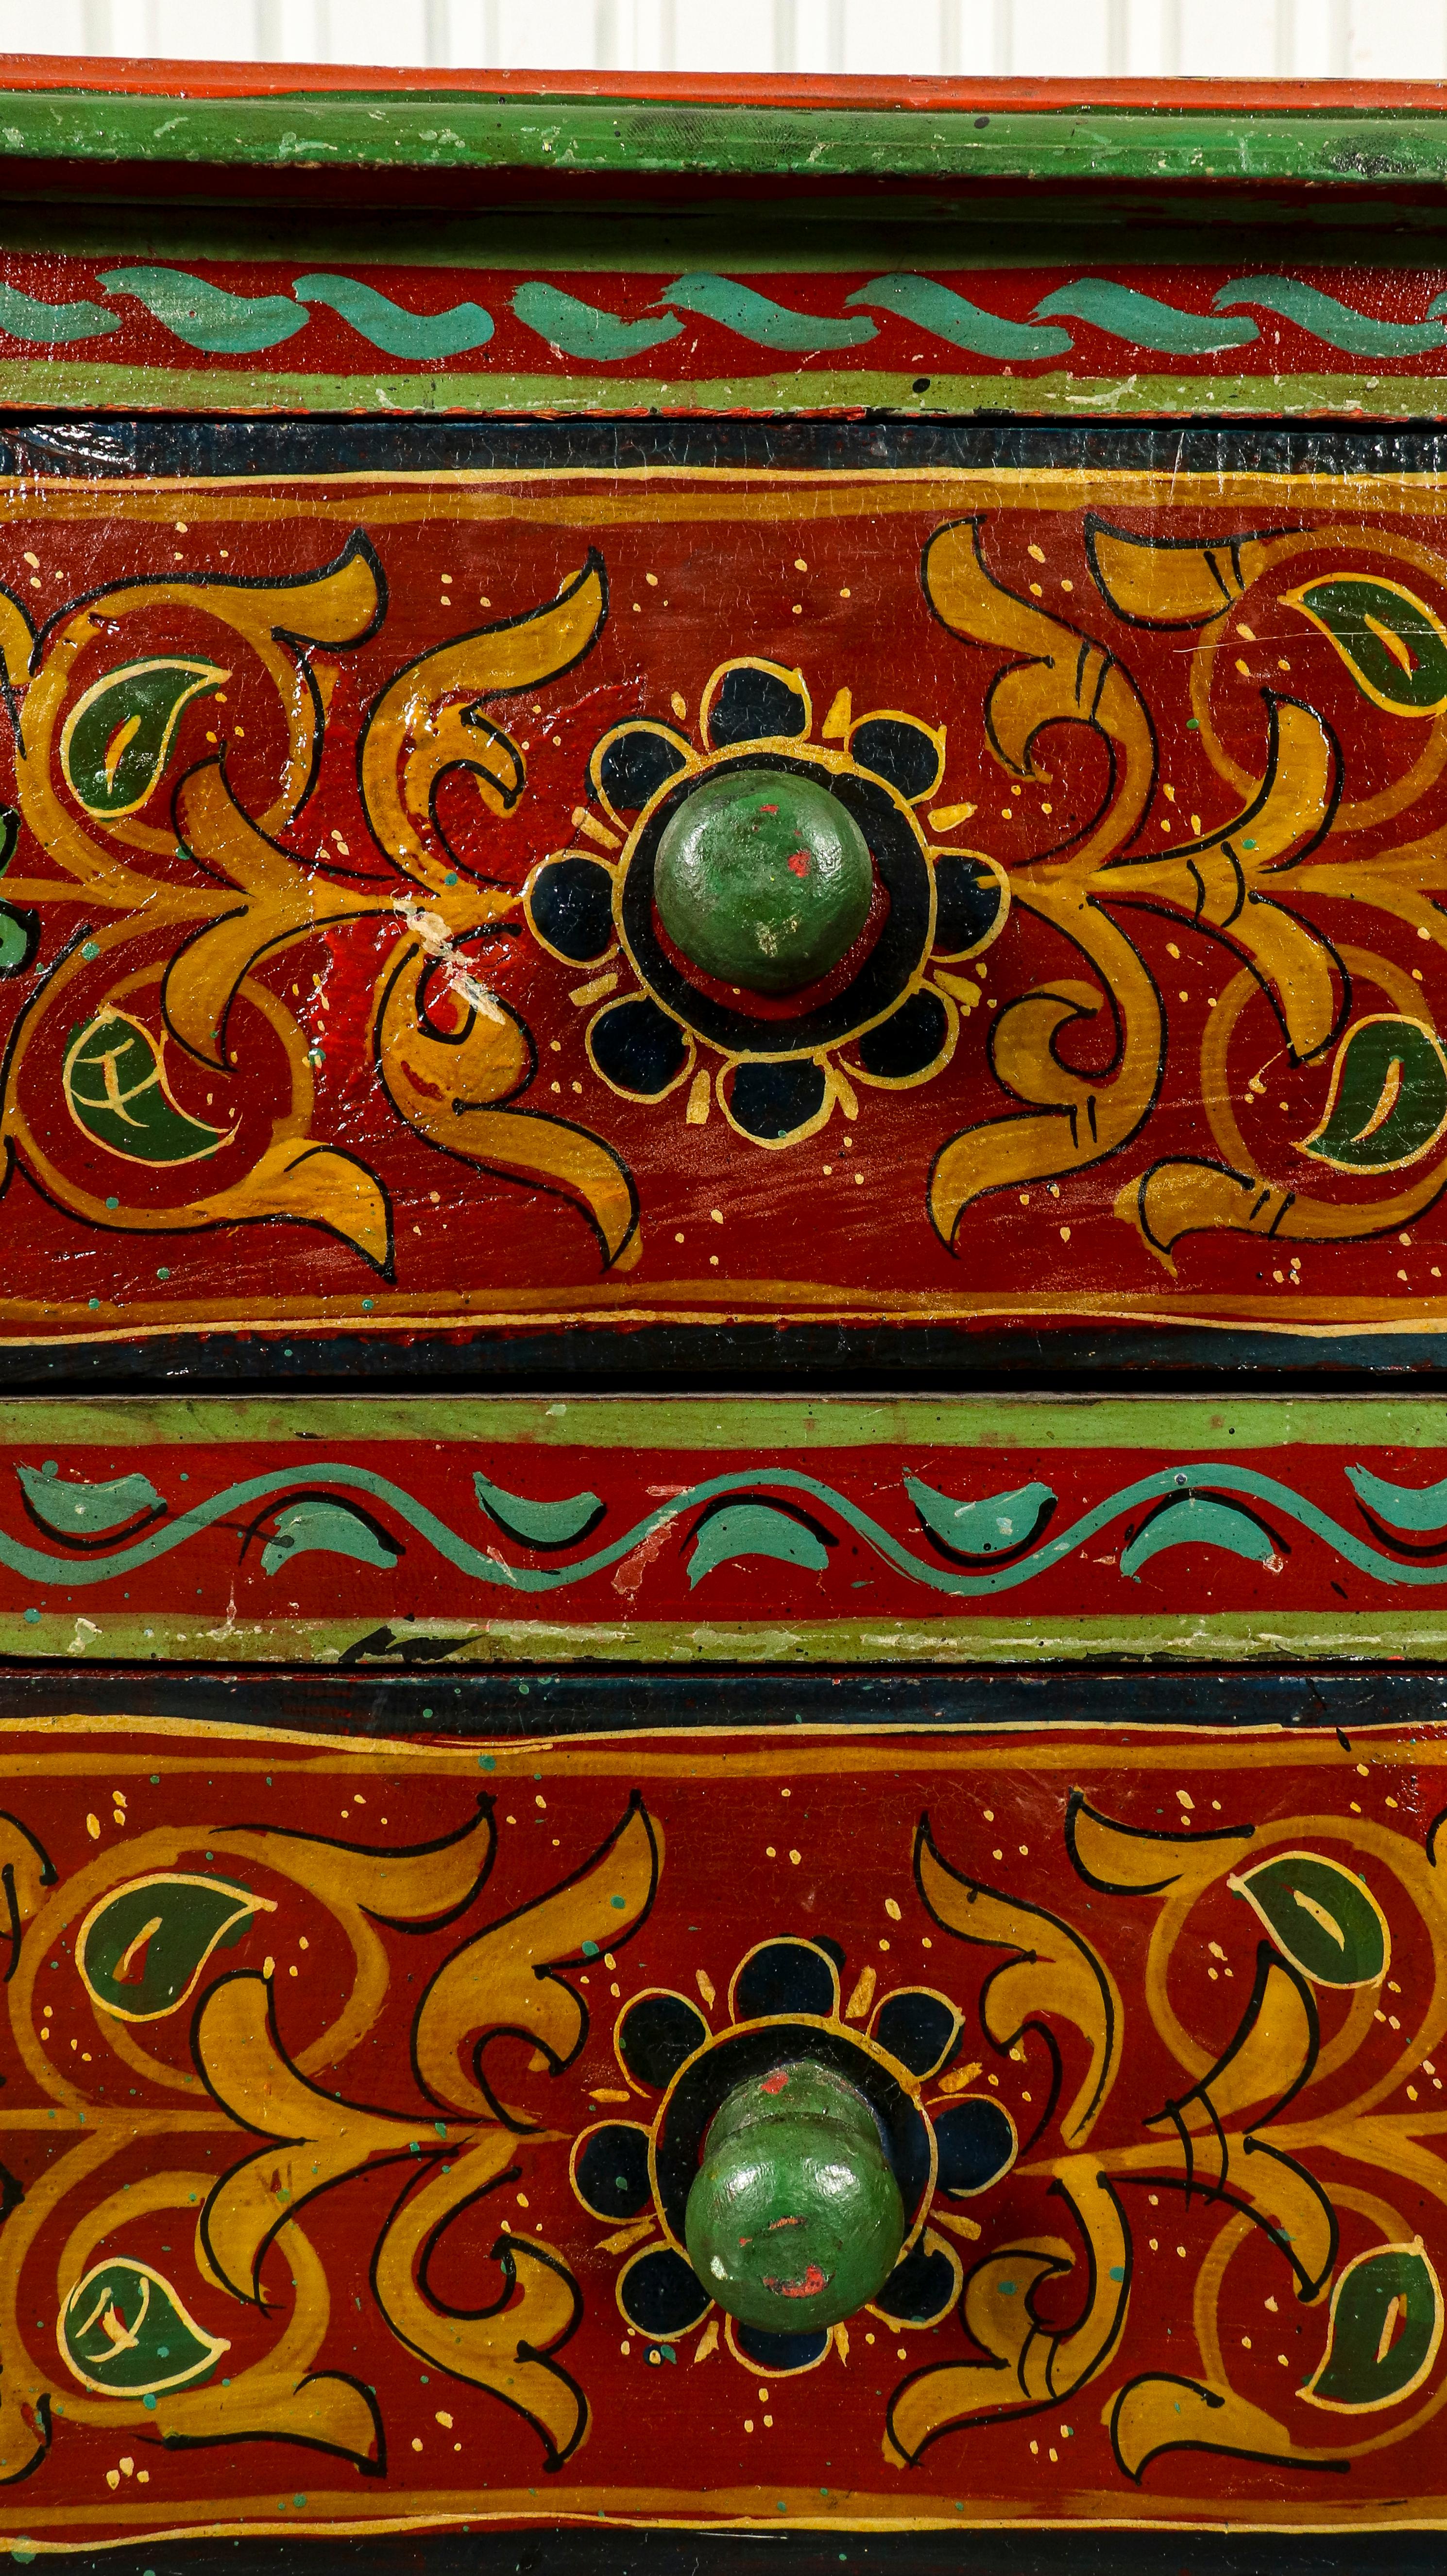 tibetan chest of drawers